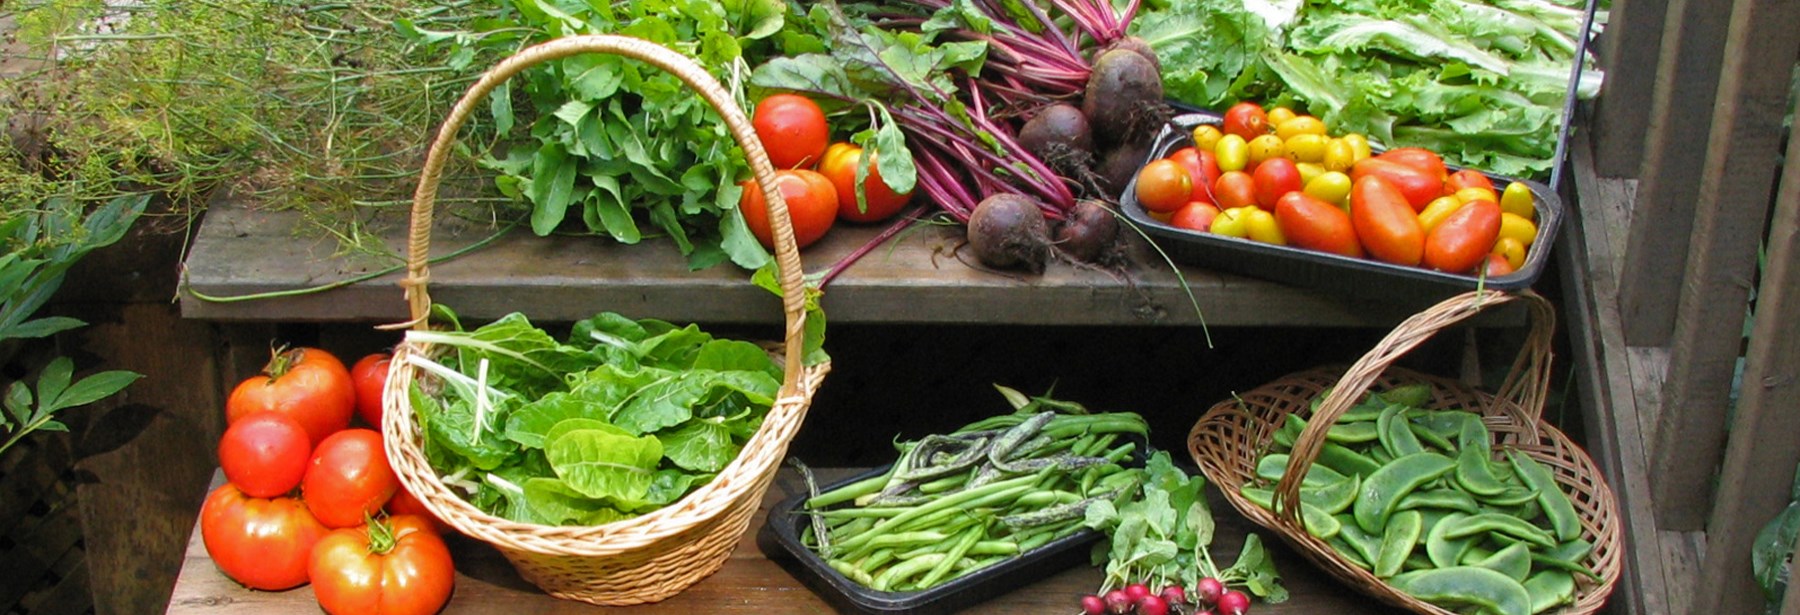 Image of Fresh Vegetables & Plants